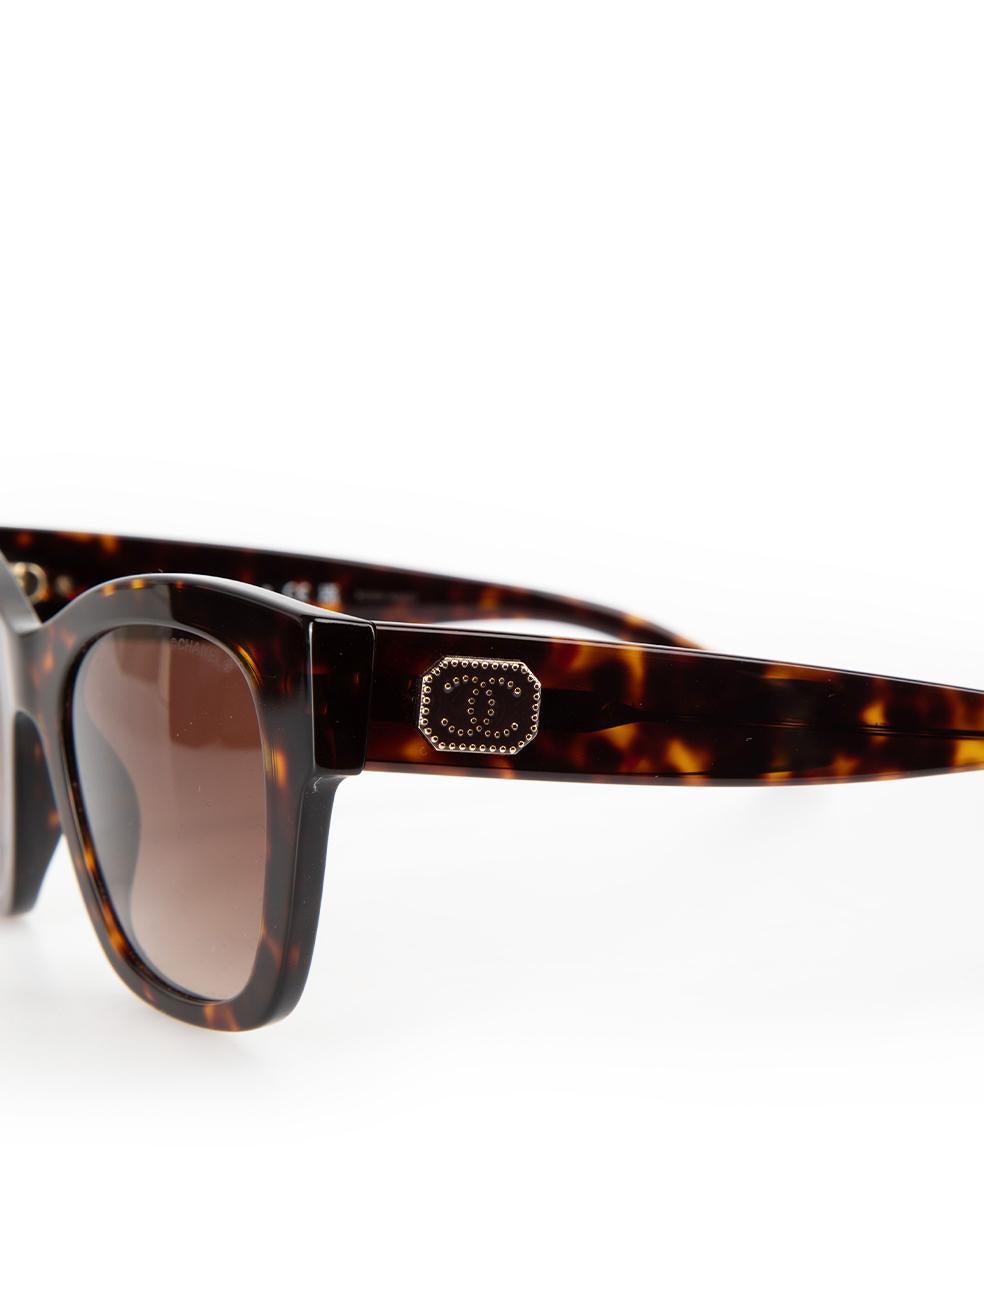 Chanel Dark Tortoise Square Sunglasses 2